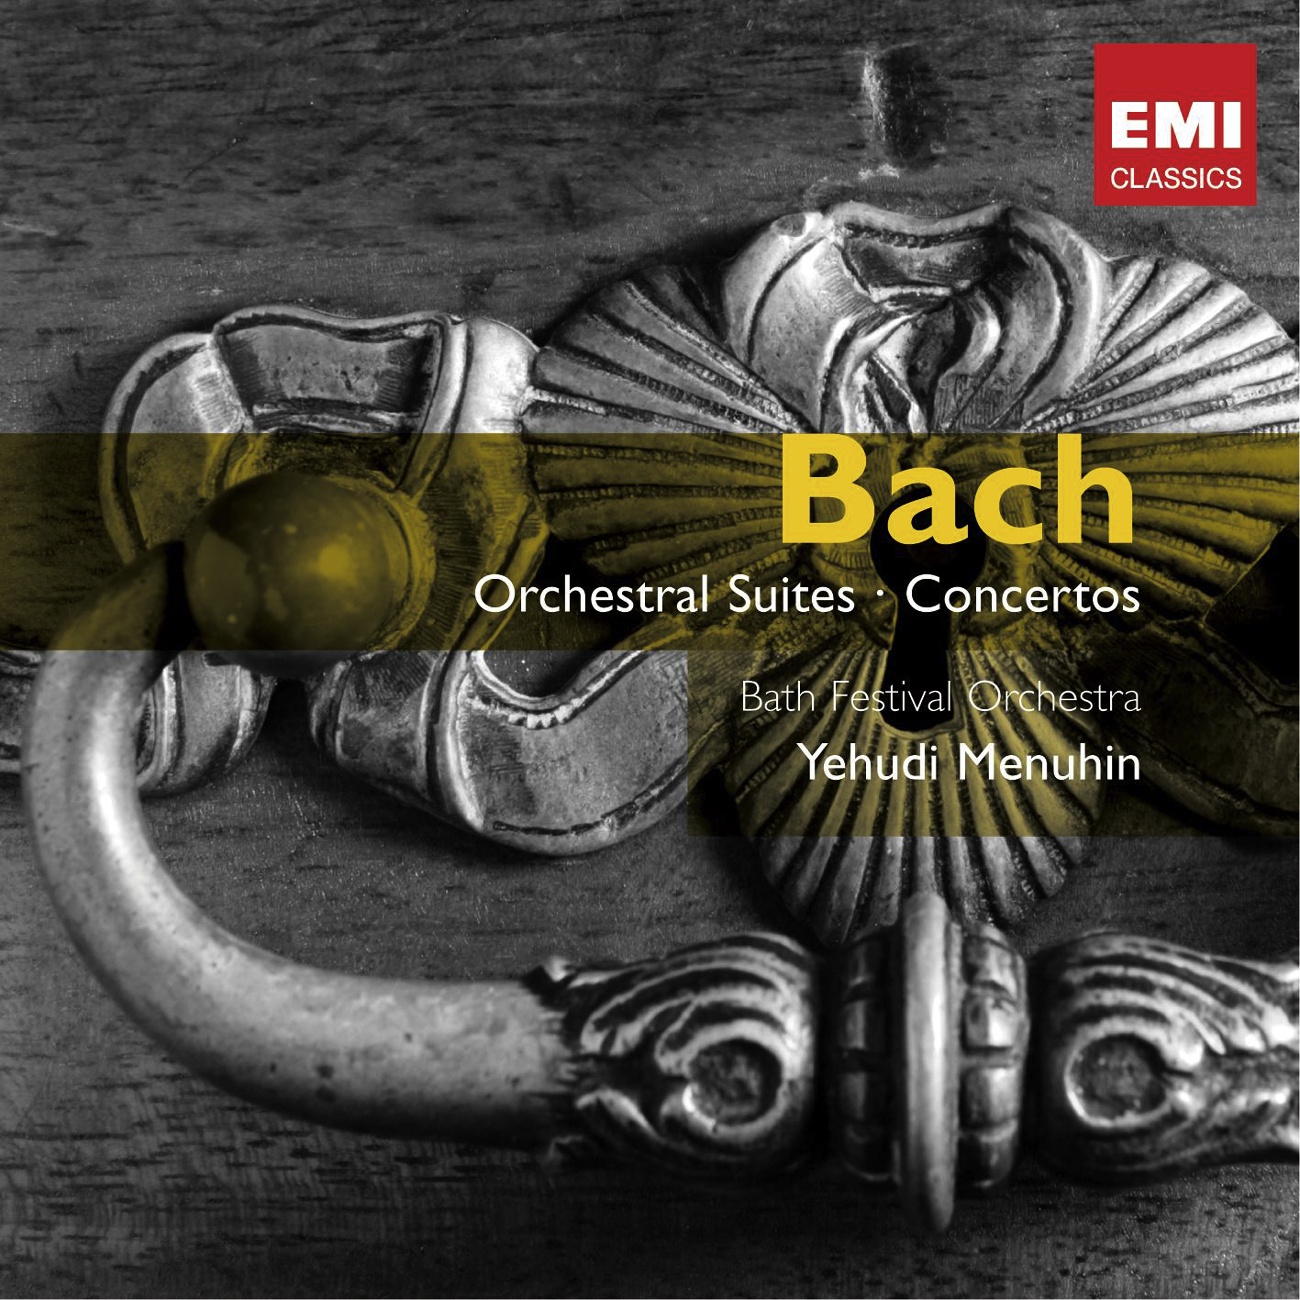 4 Orchestral Suites BWV1066-9 (1991 Digital Remaster), Suite No. 3 in D BWV1068: I.       Ouverture